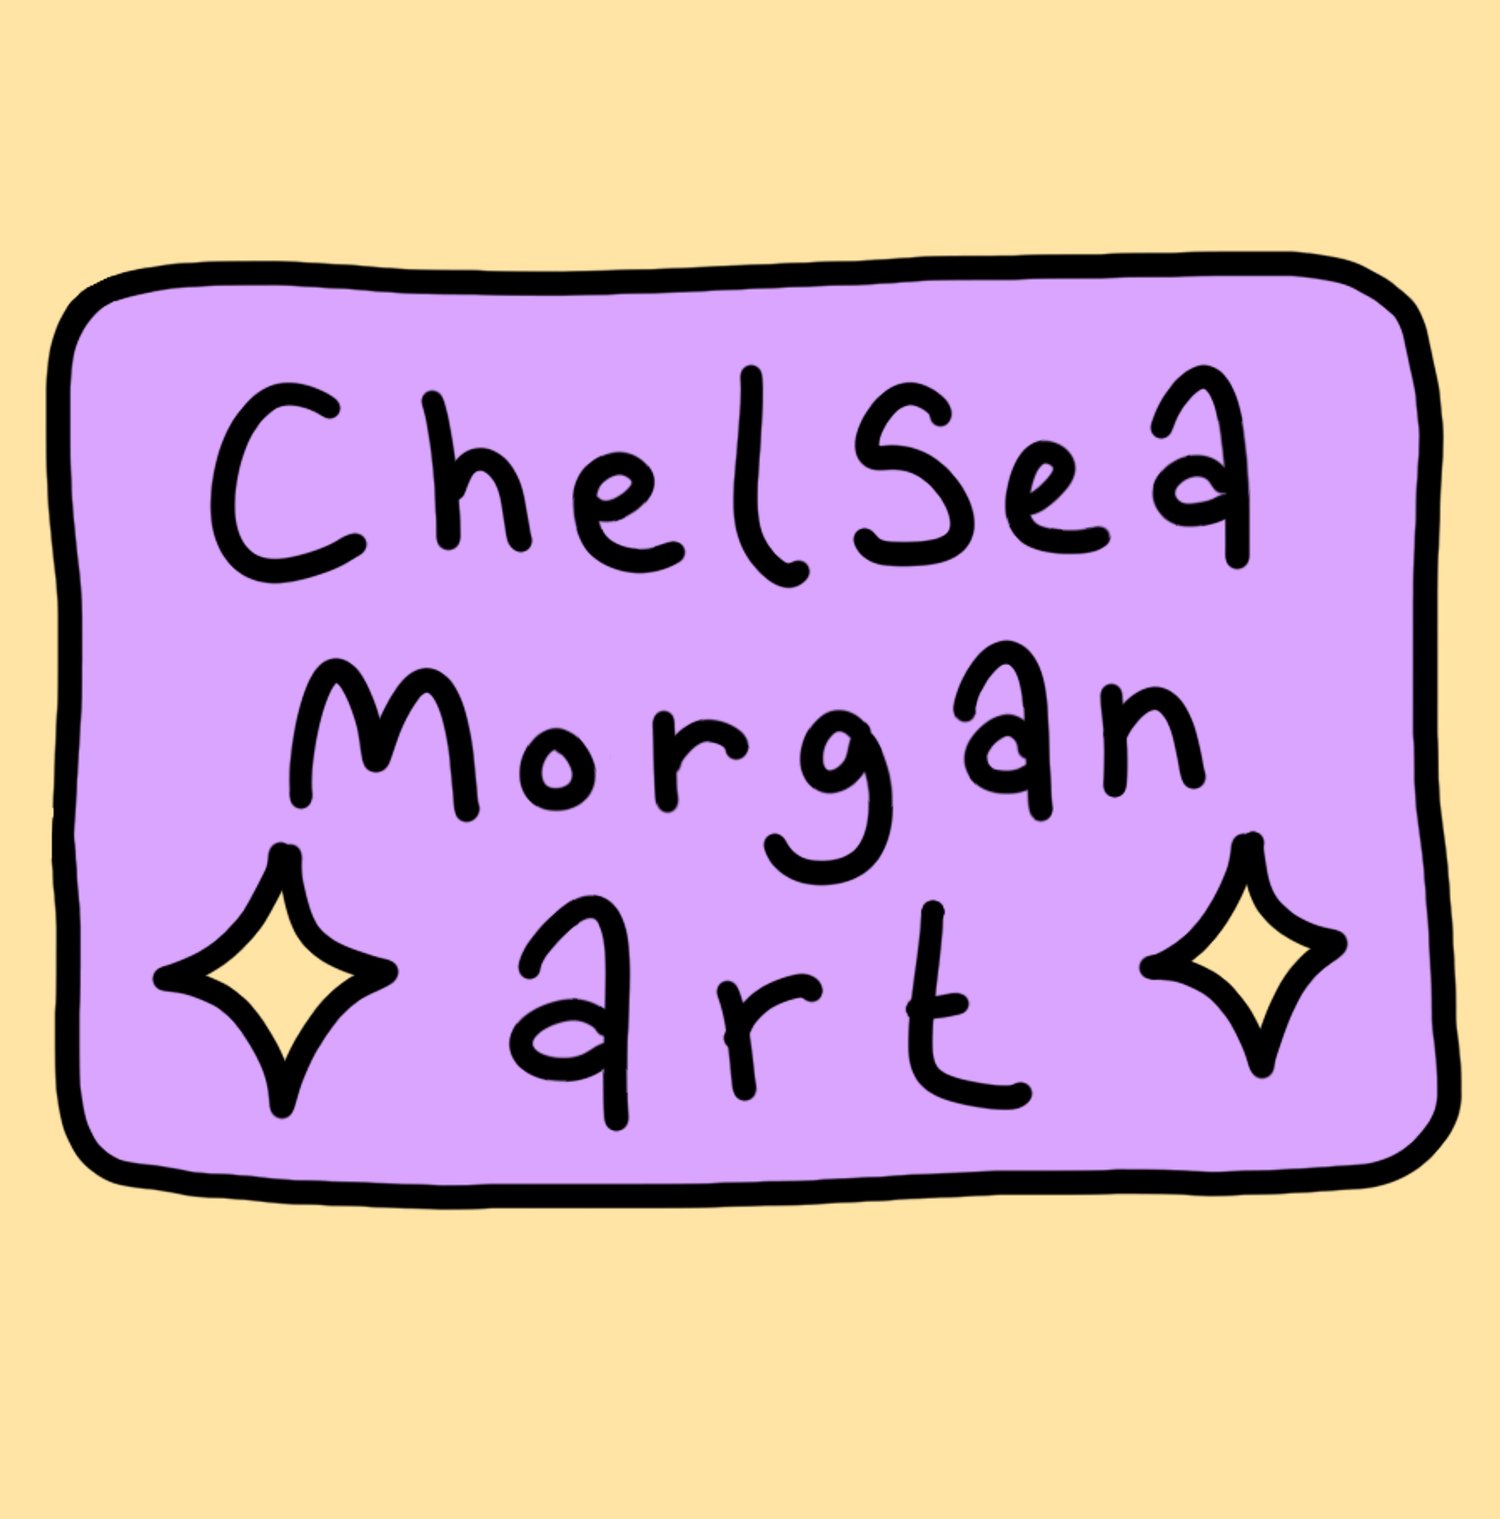 Chelsea Morgan Art